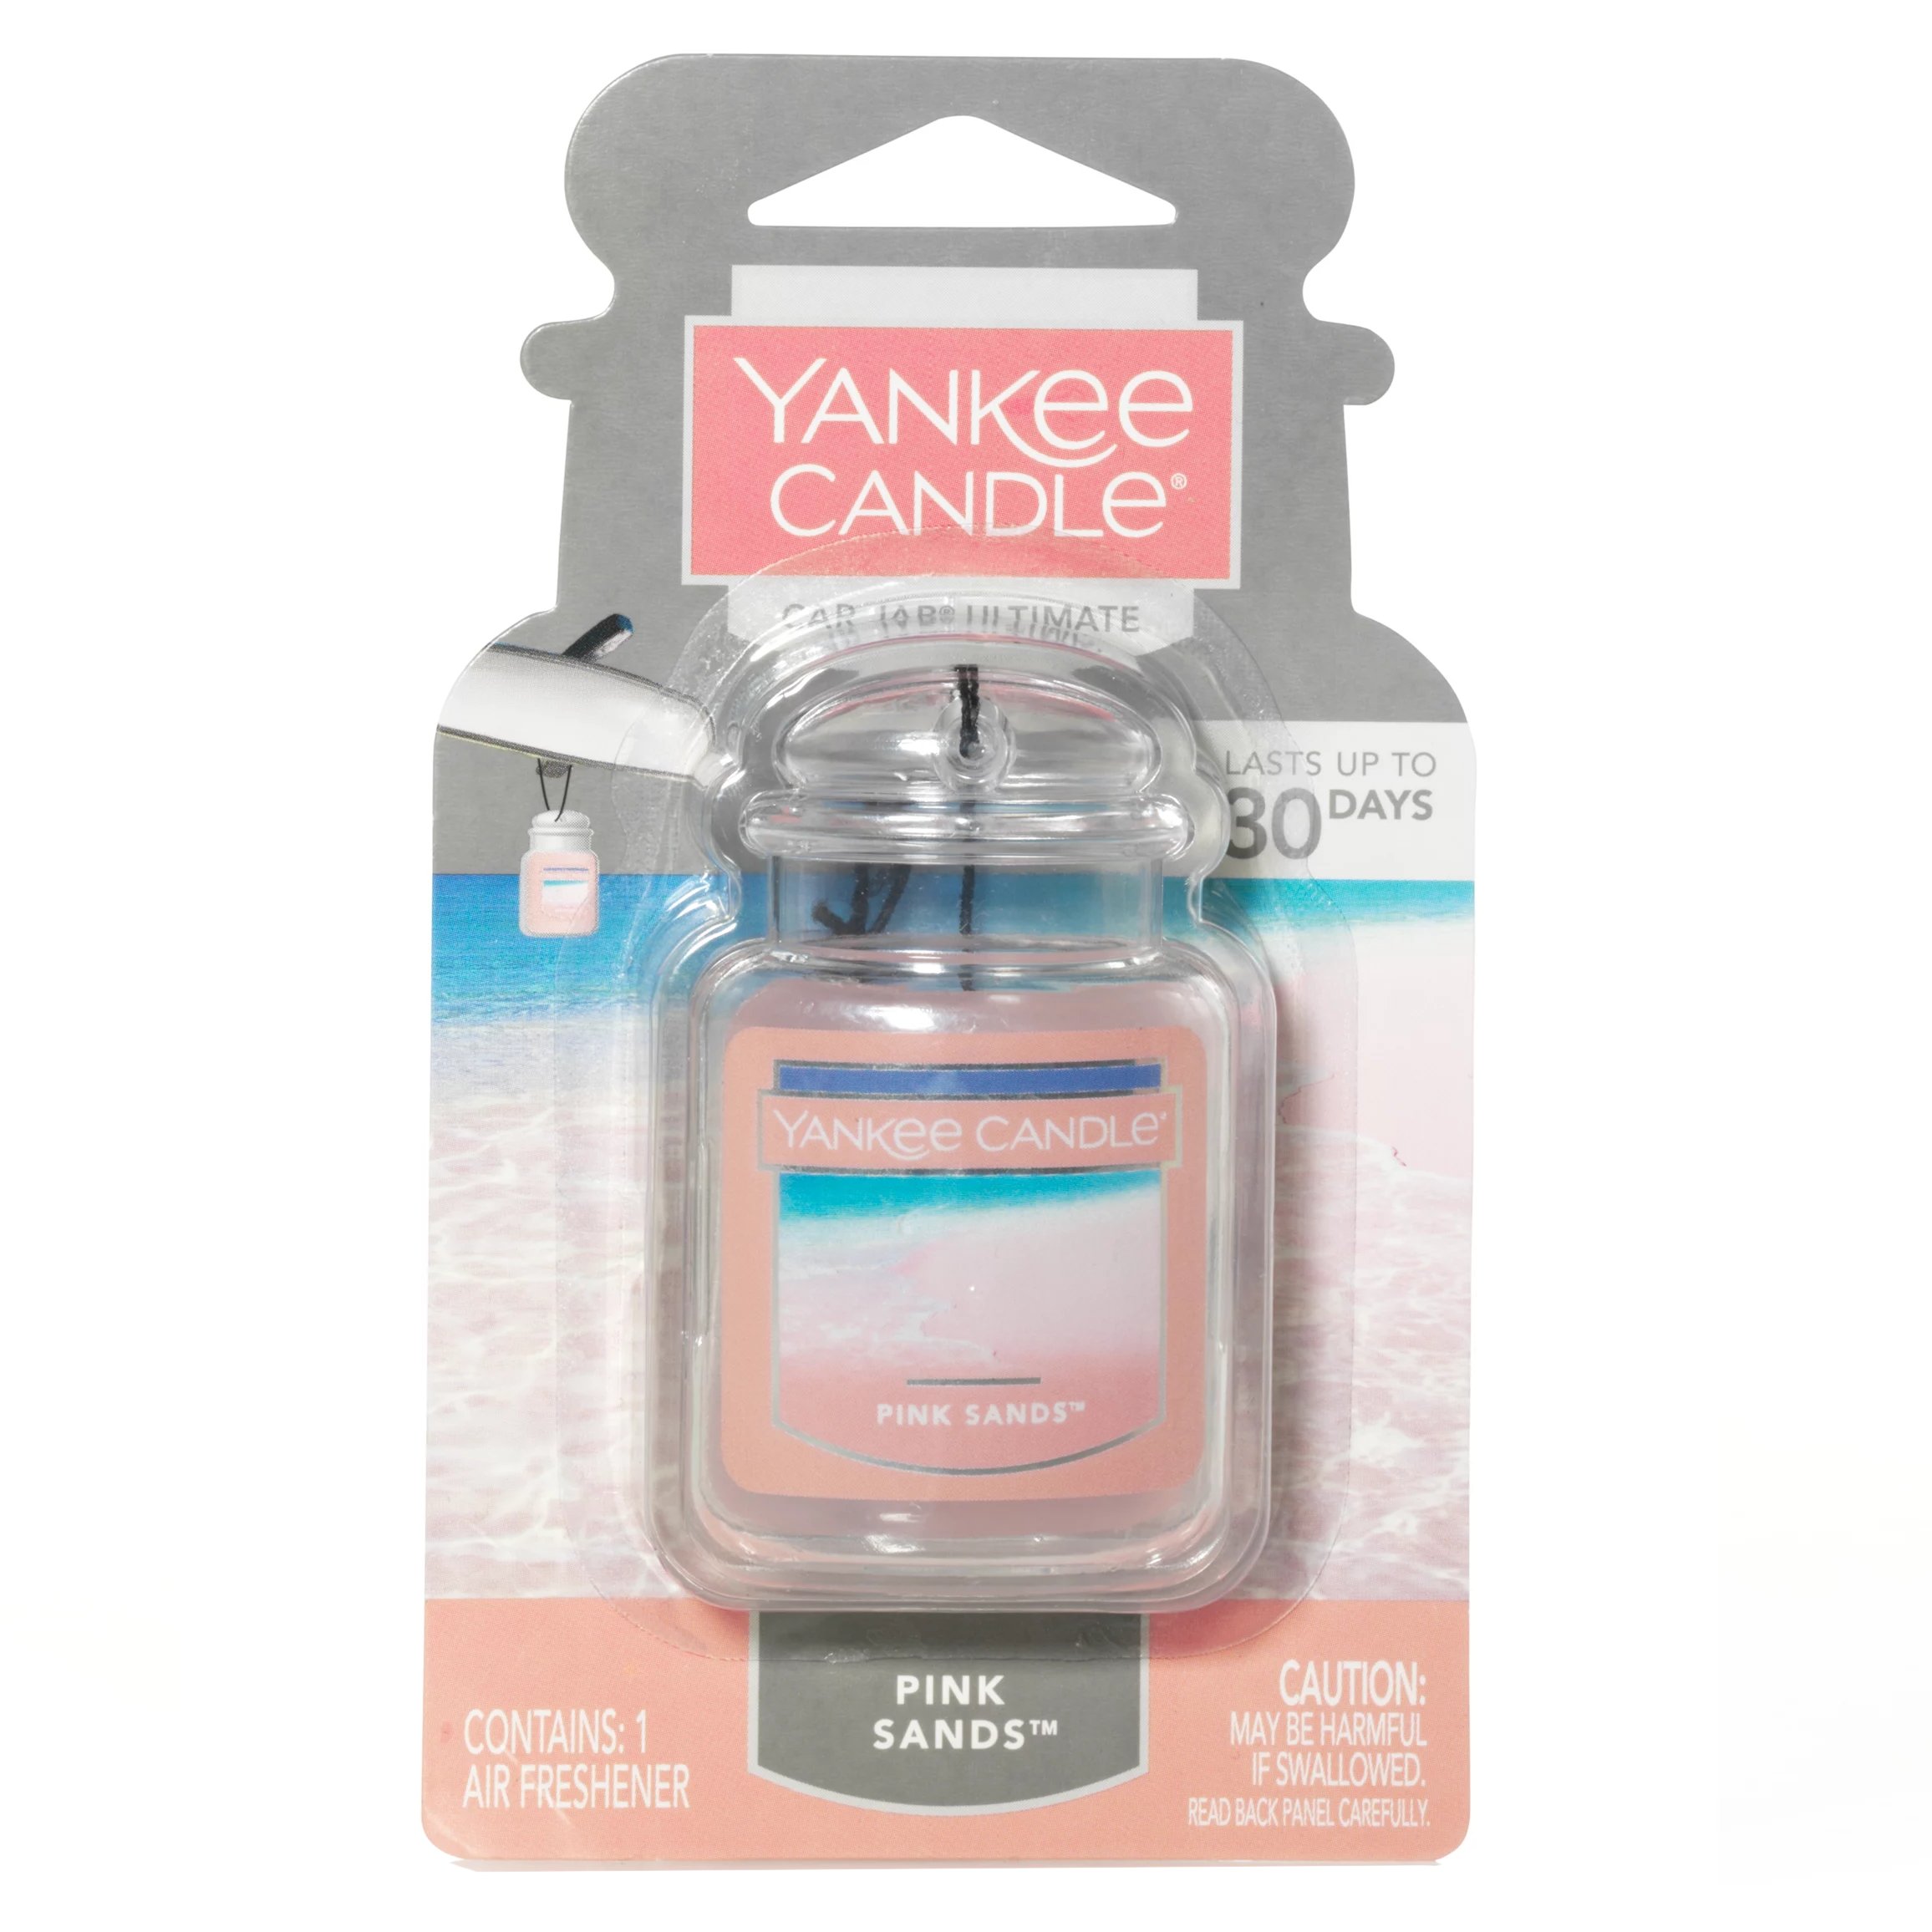 Yankee Candle Car Vent Clip HW Pink Sands, Smart Scent